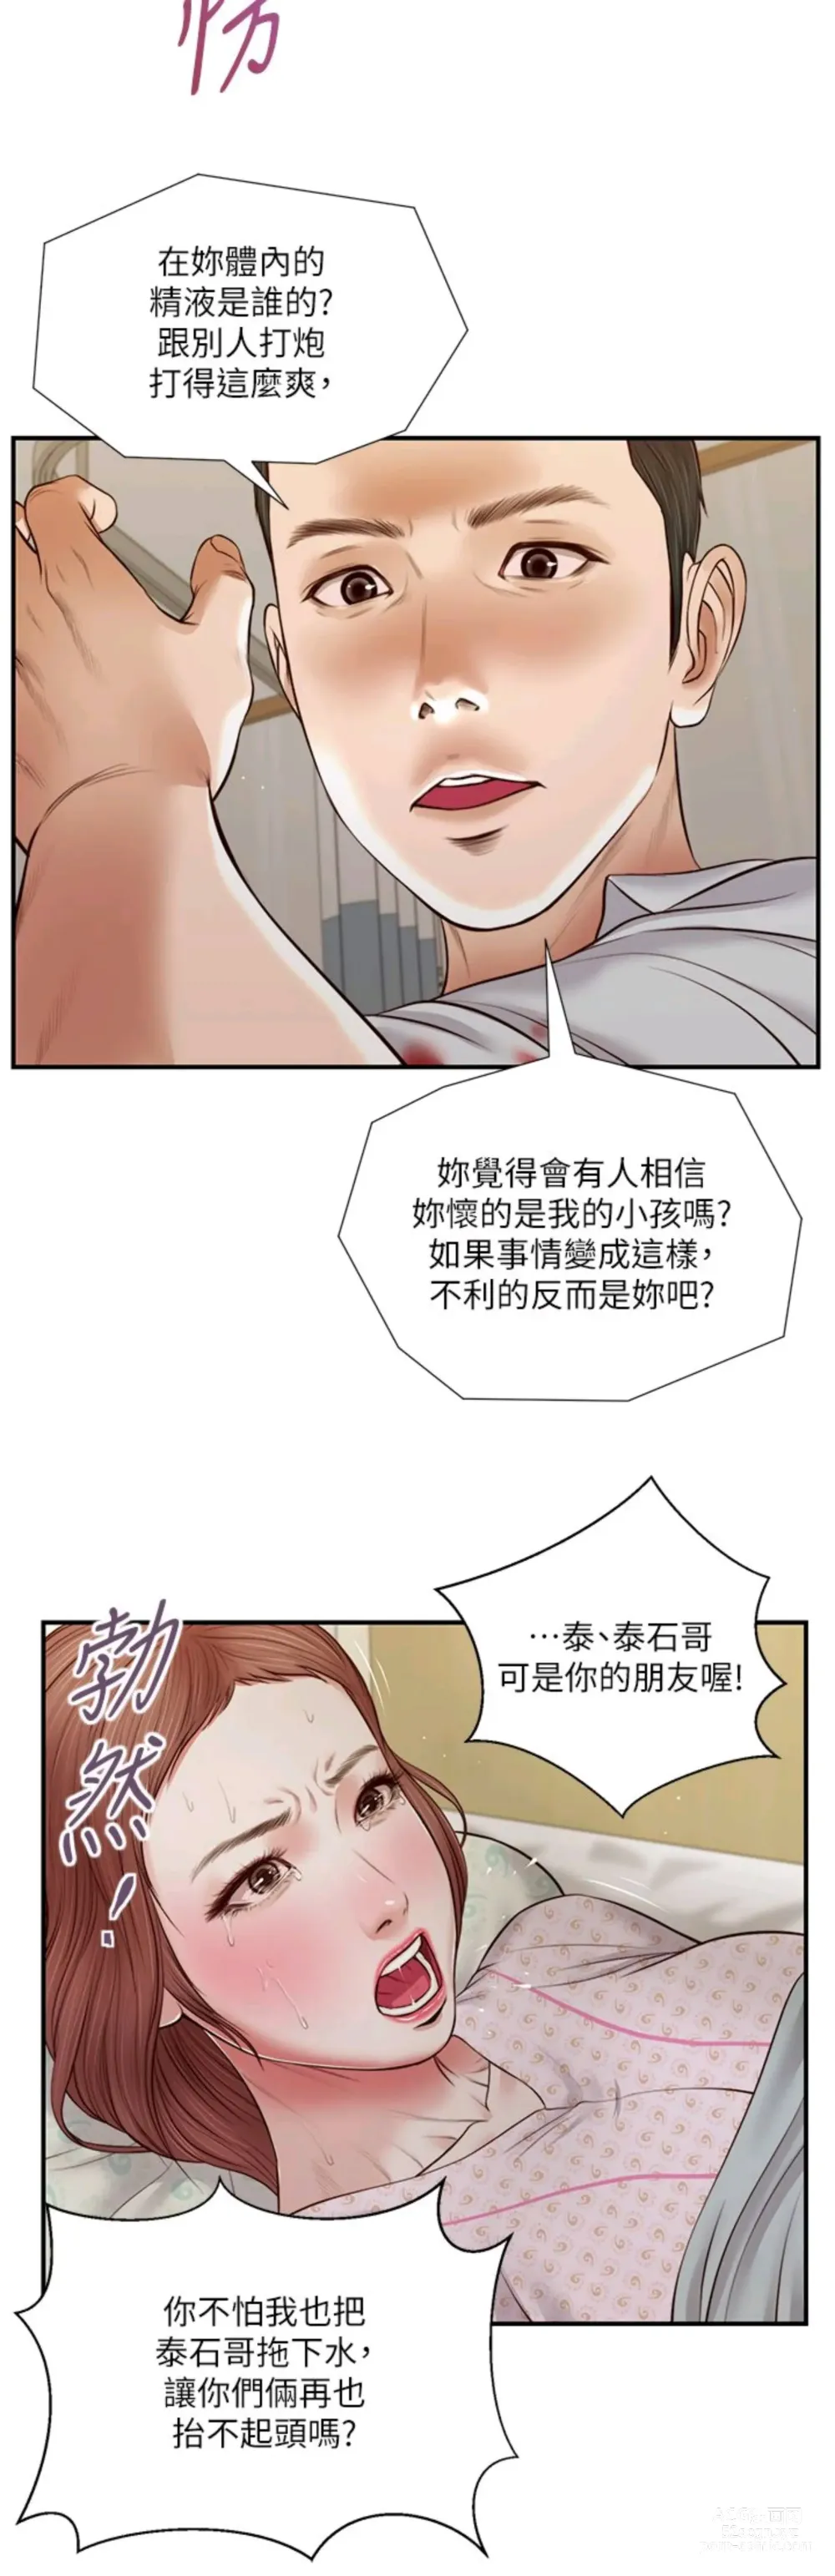 Page 6 of manga 小妾 71-118话